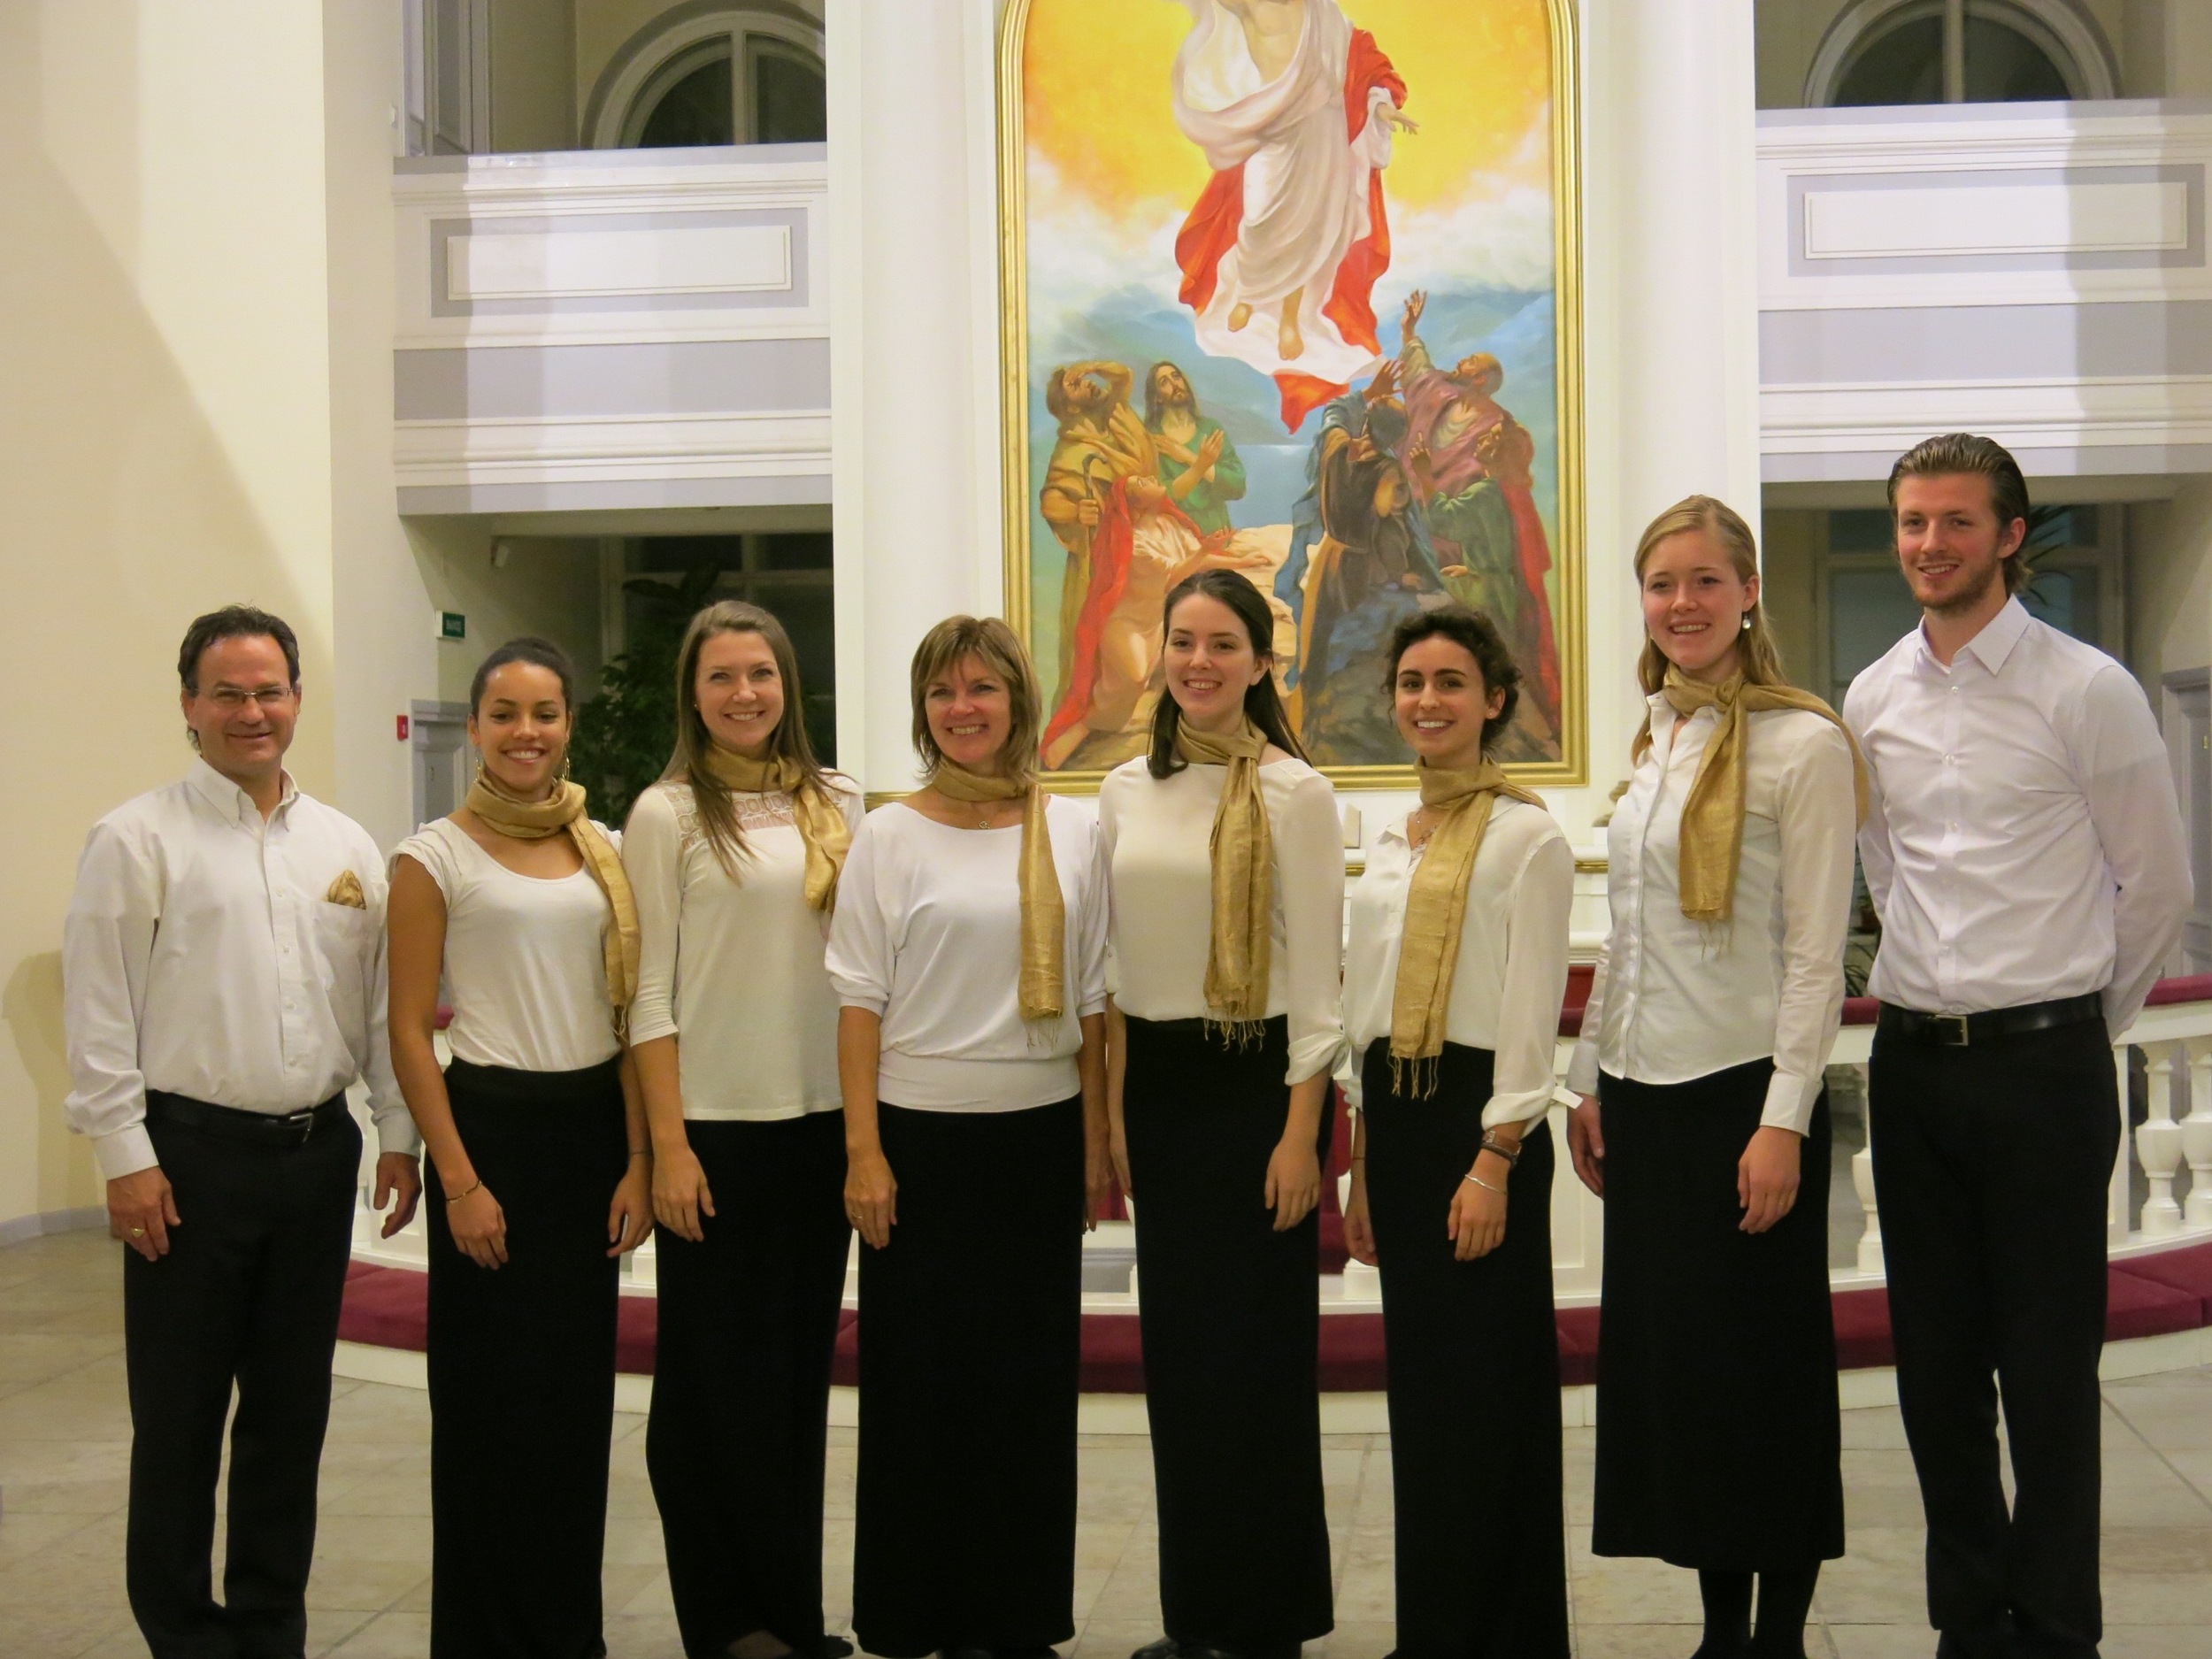  Église Luthérienne Sainte Marie, Saint Pétersbourg, Russie  Chorale Harmonie  